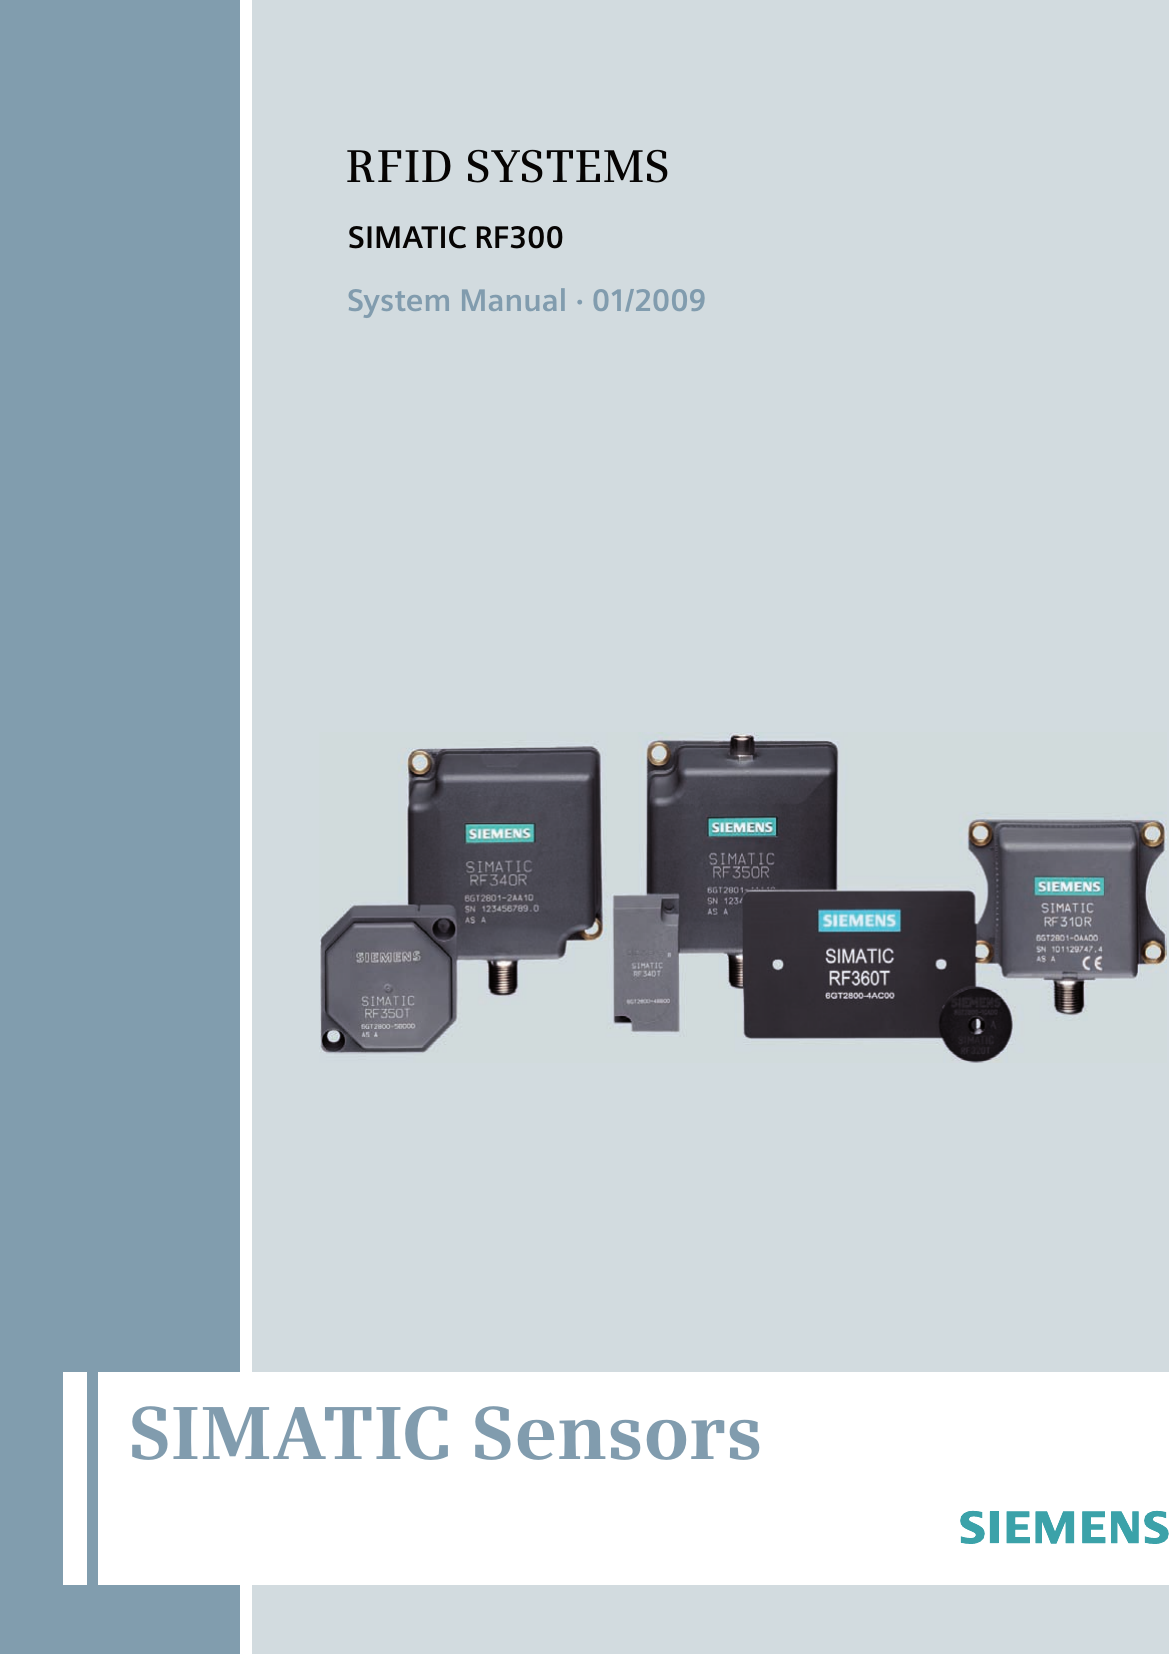 SIMATIC Sensors RFID systems SIMATIC RF300 SIMATIC SensorsSystem Manual · 01/2009SIMATIC RF300RFID SYSTEMS